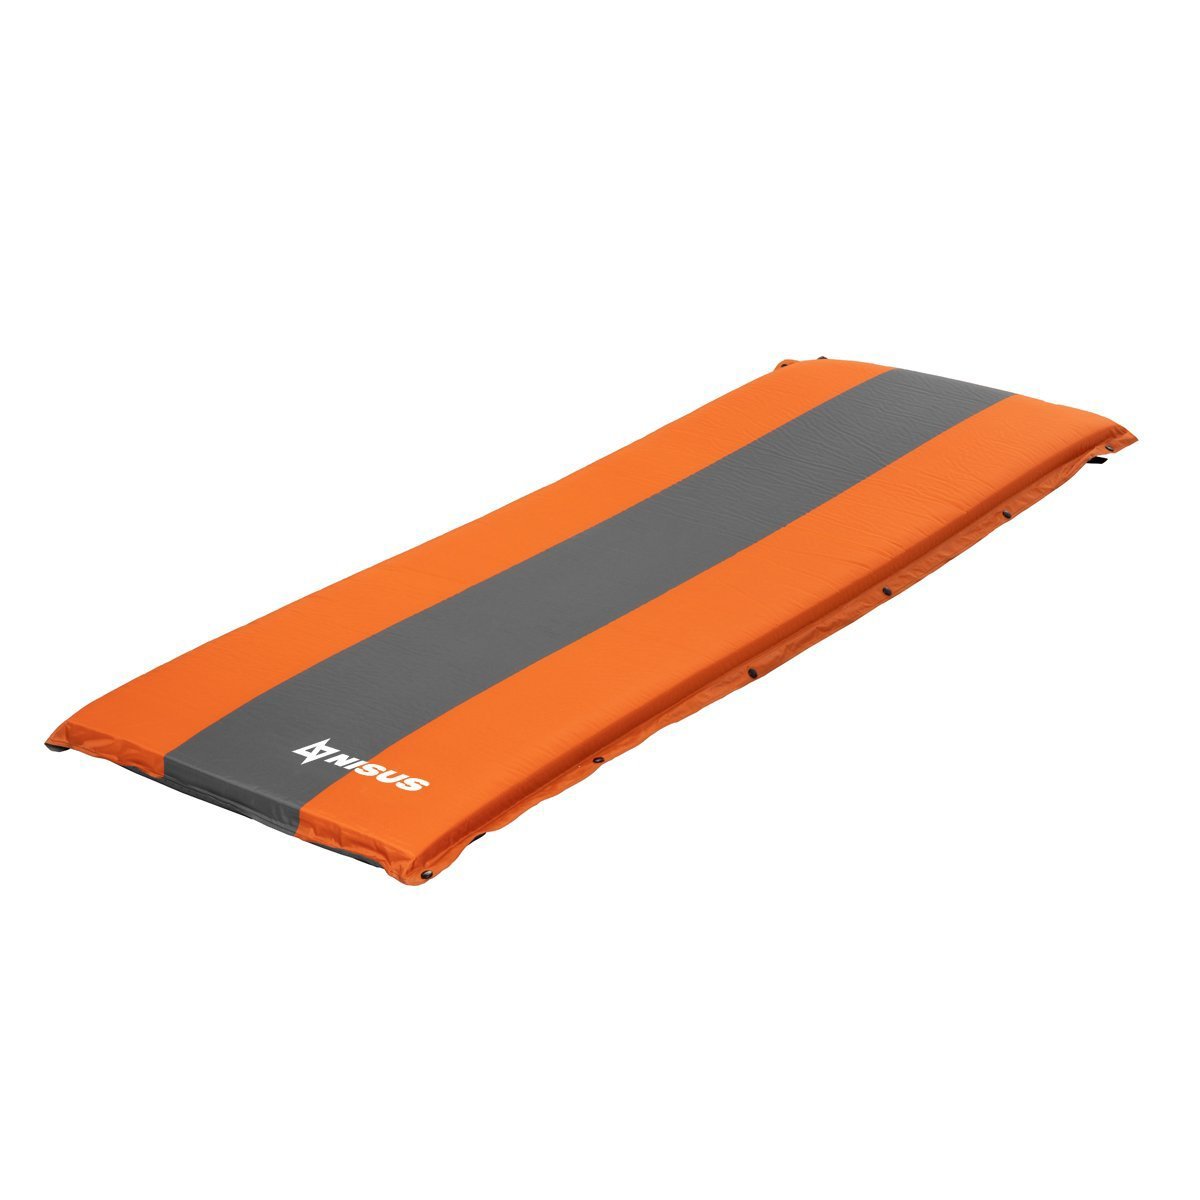 2.5-inch Lightweight Self Inflating Camping Sleeping Pad, Orange